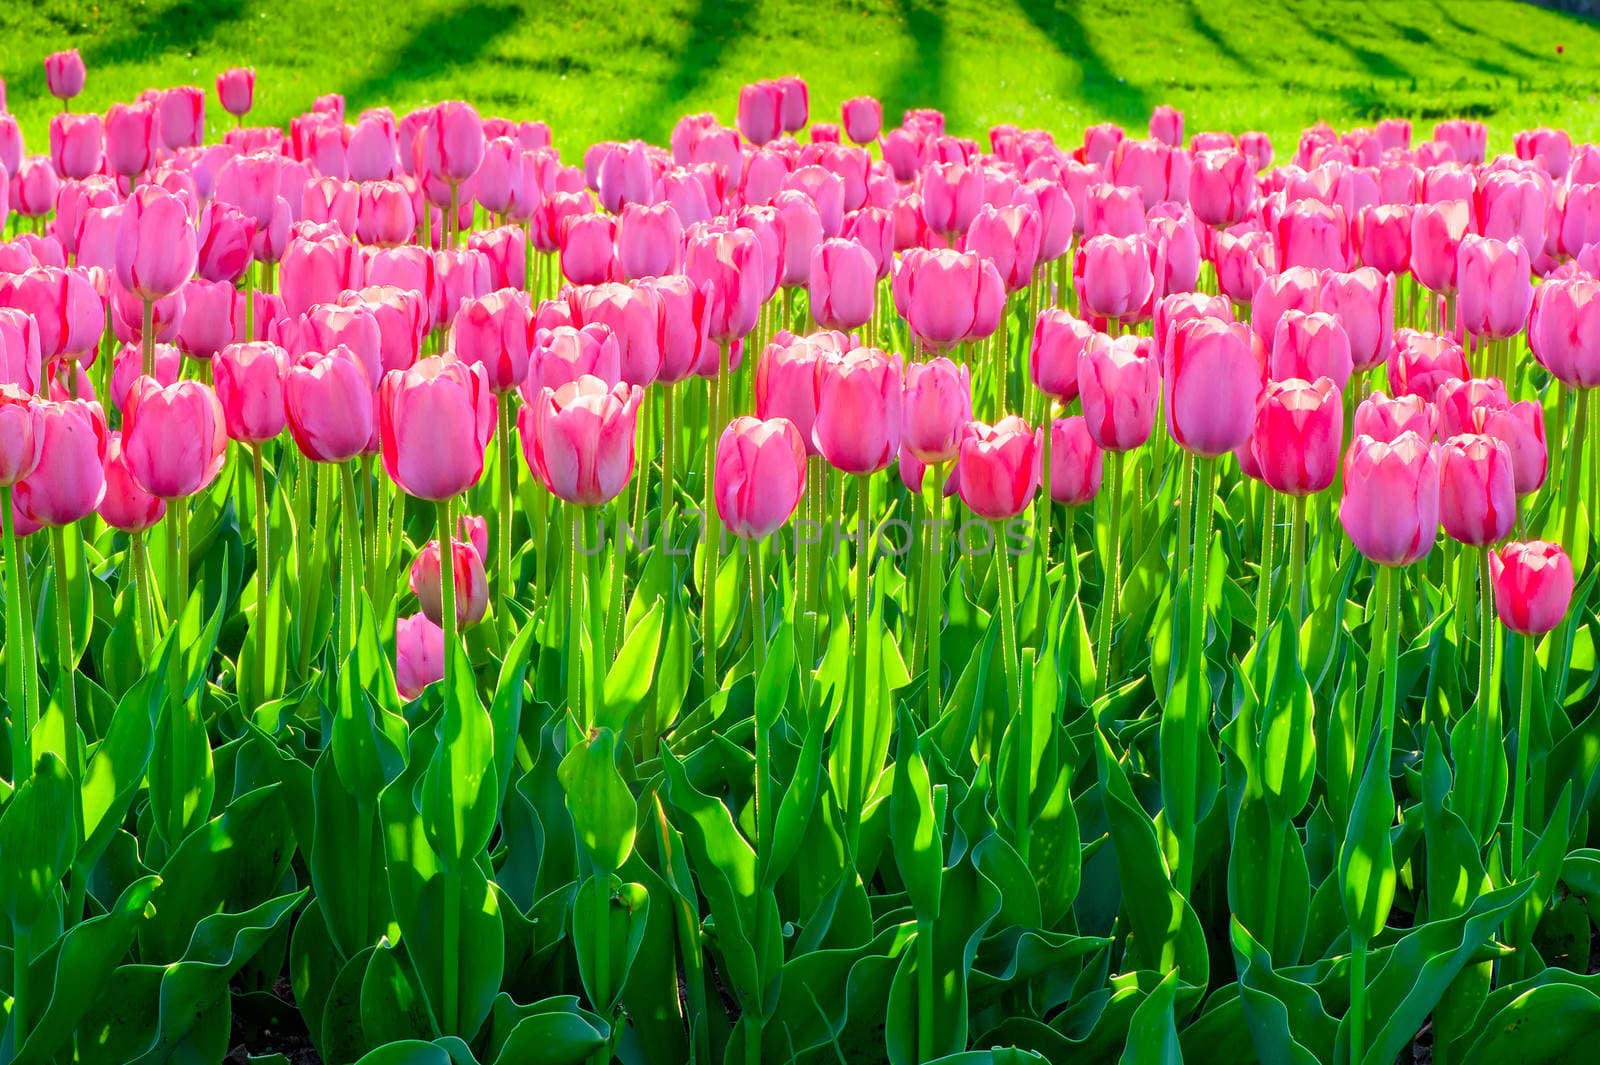 beautiful pink tulips in the garden